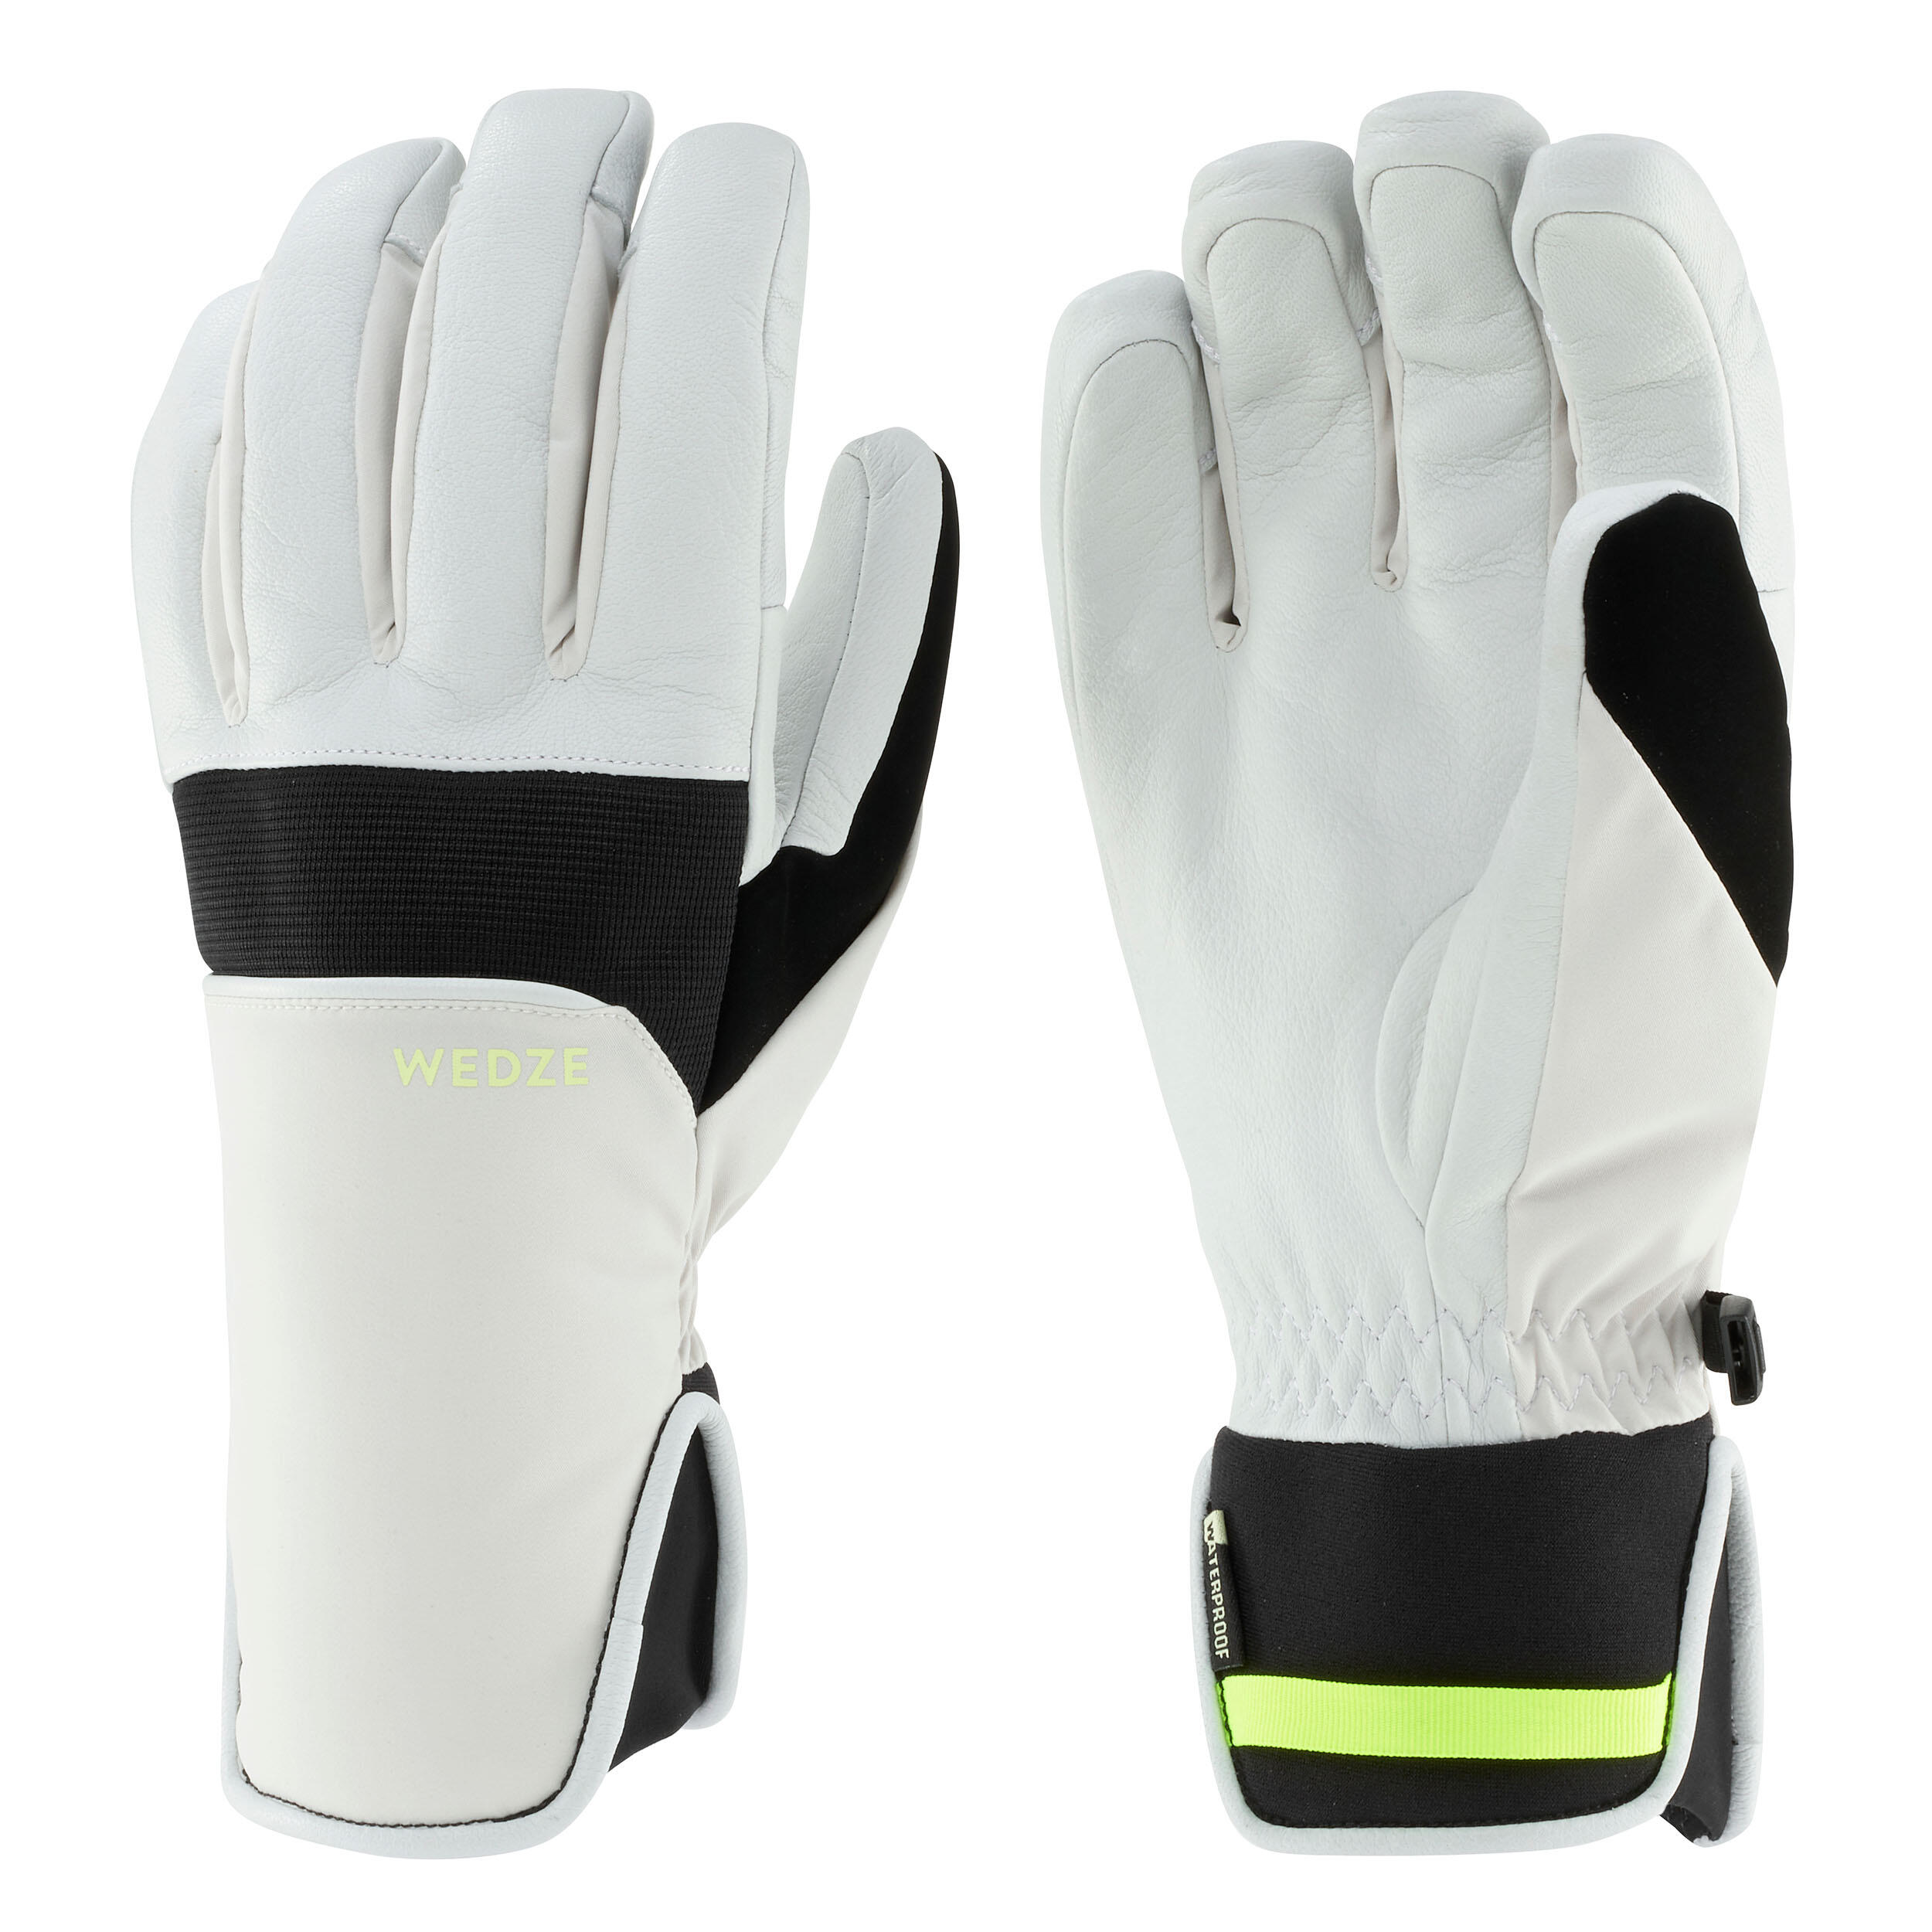 WEDZE Adult ski gloves 550 - Beige and White